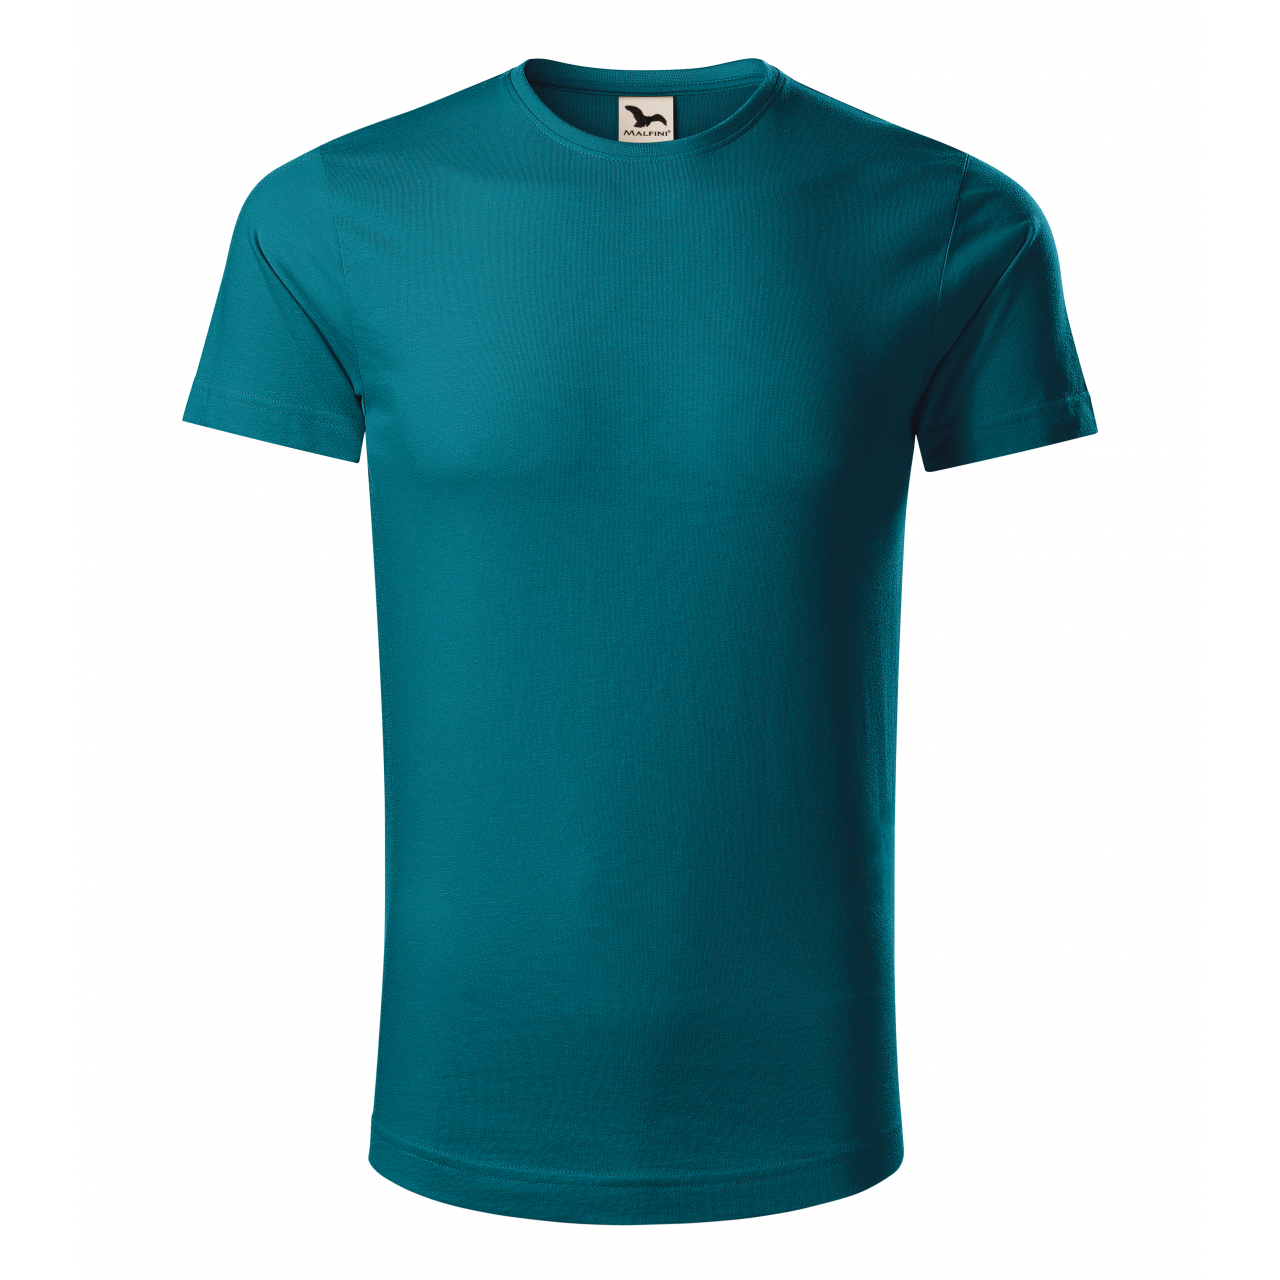 Tričko pánské Malfini Origin - tmavě modré, XL